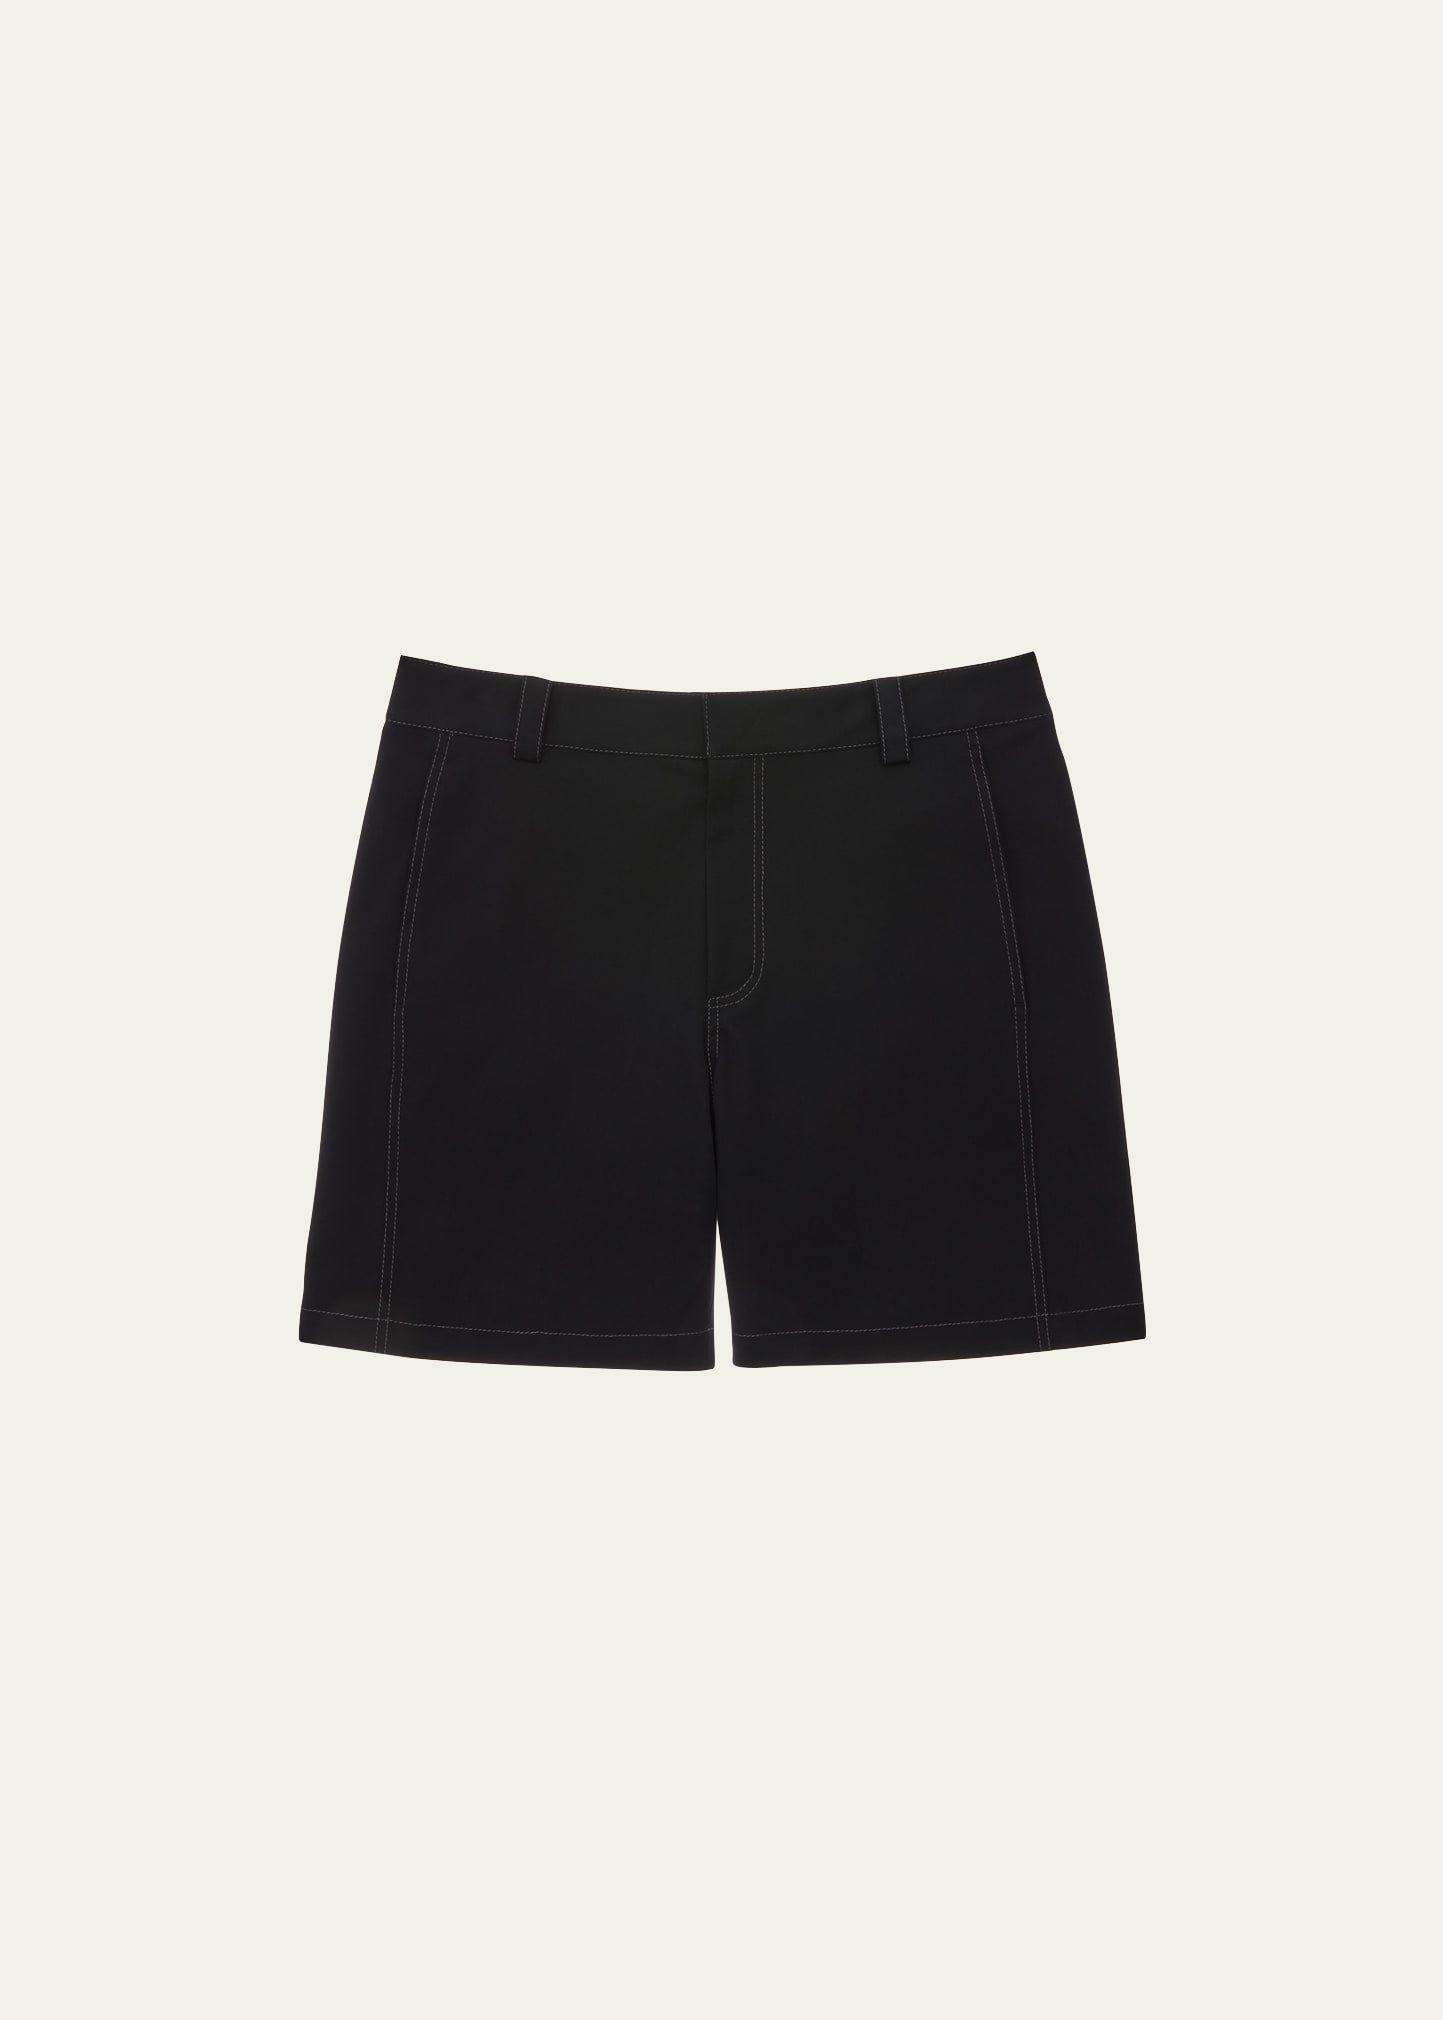 Men's Cotton-Stretch Shorts